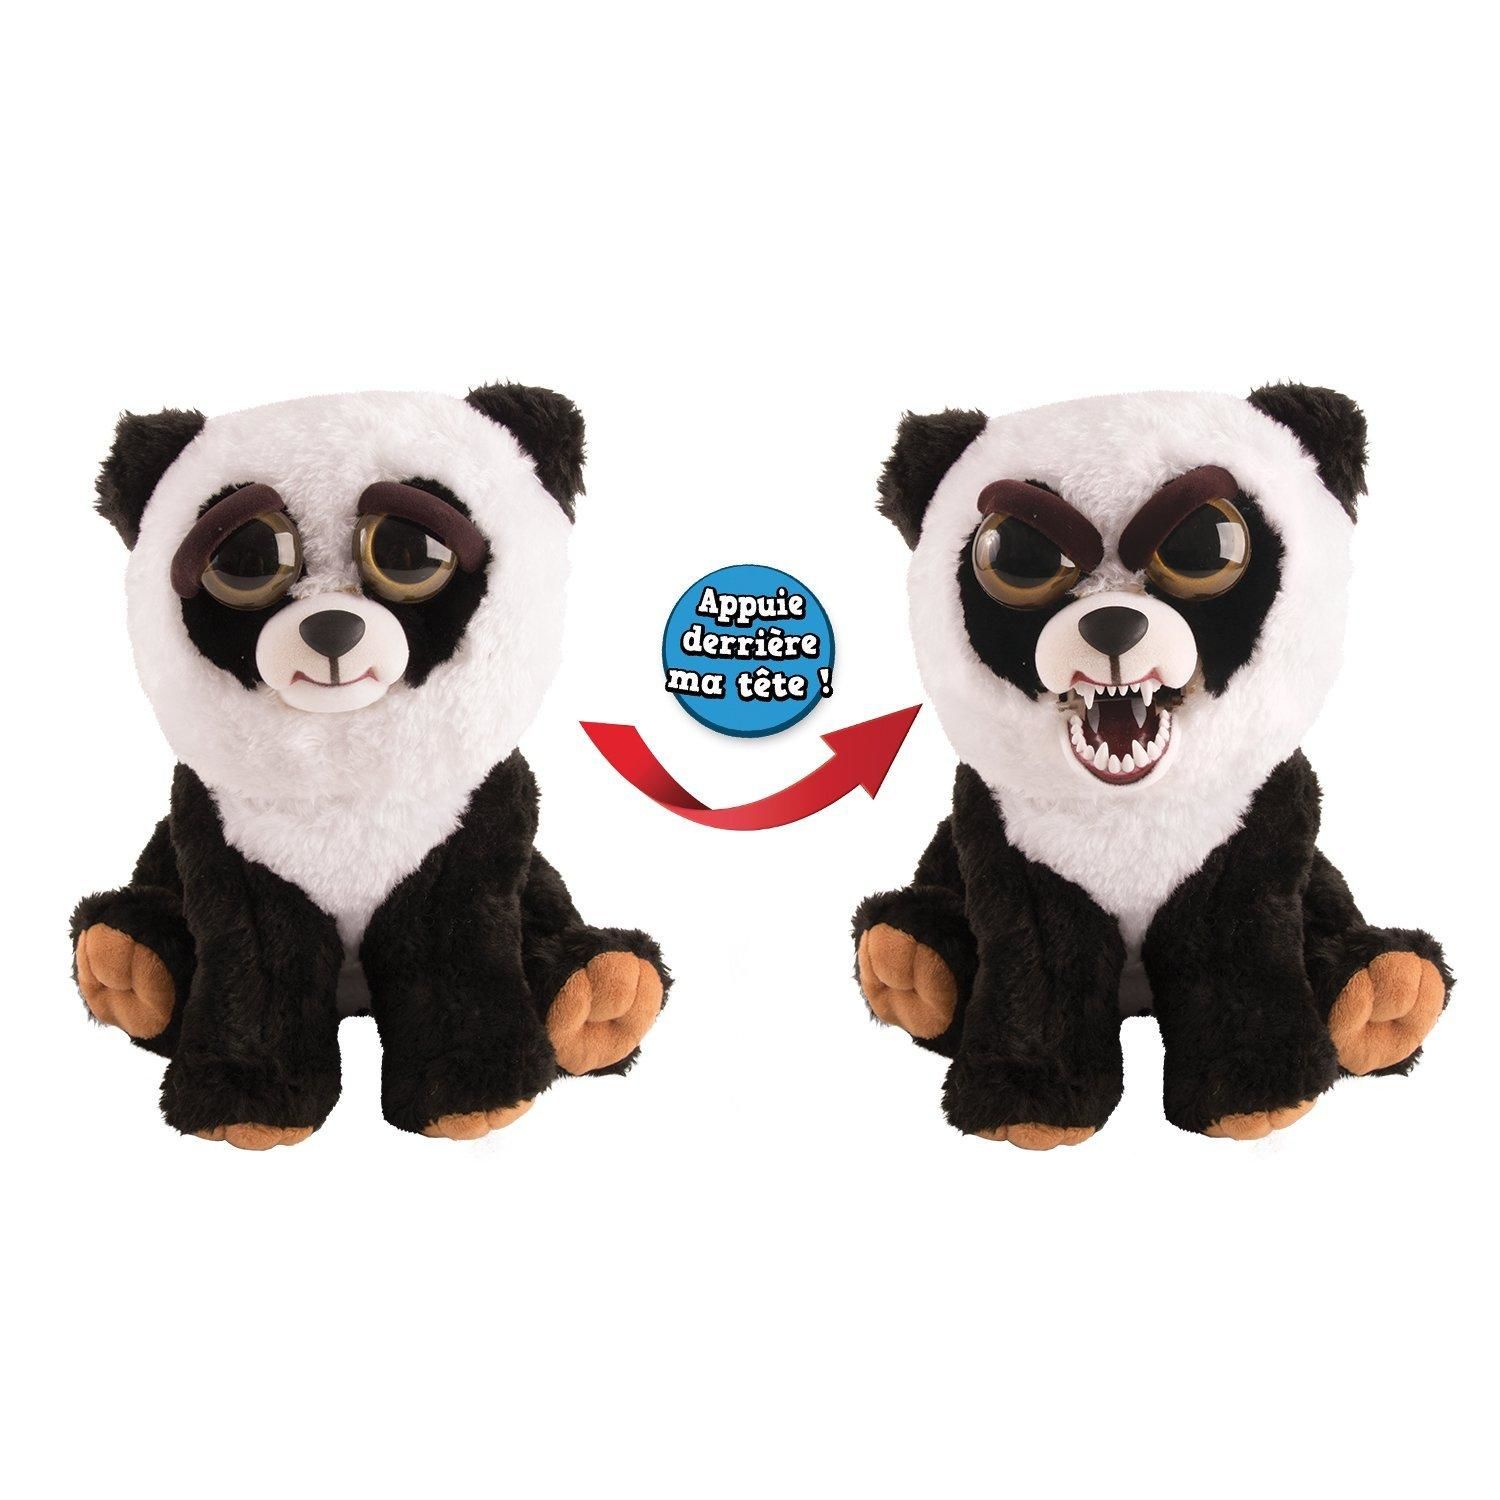 Acheter Feisty Pets Panda - Peluches prix promo neuf et occasion pas cher